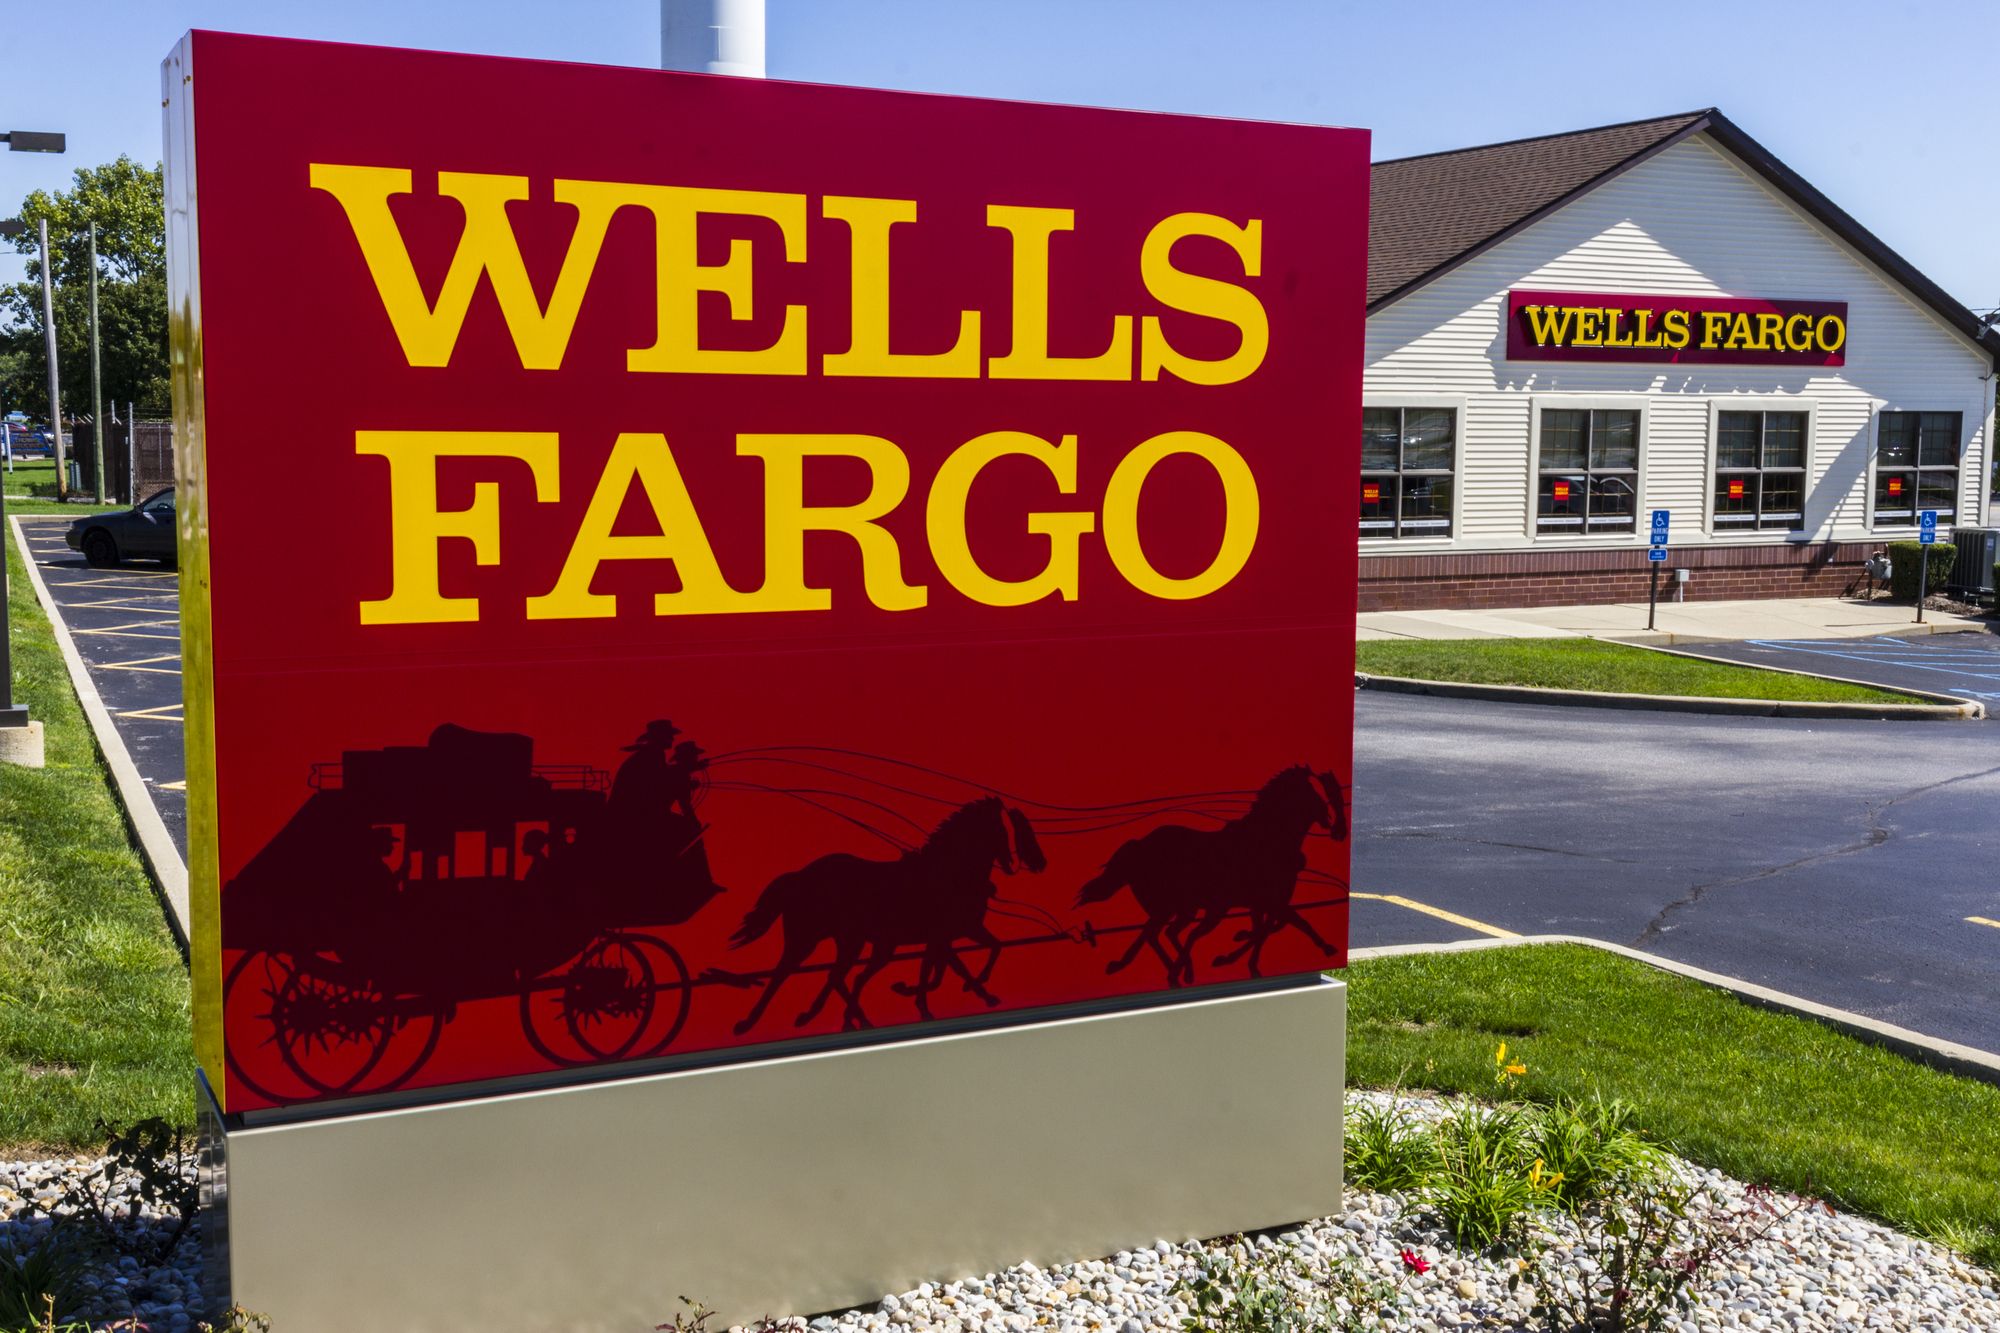 Ft. Wayne - Circa September 2016: Wells Fargo Retail Bank Branch. Wells Fargo is a Provider of Financial Services X